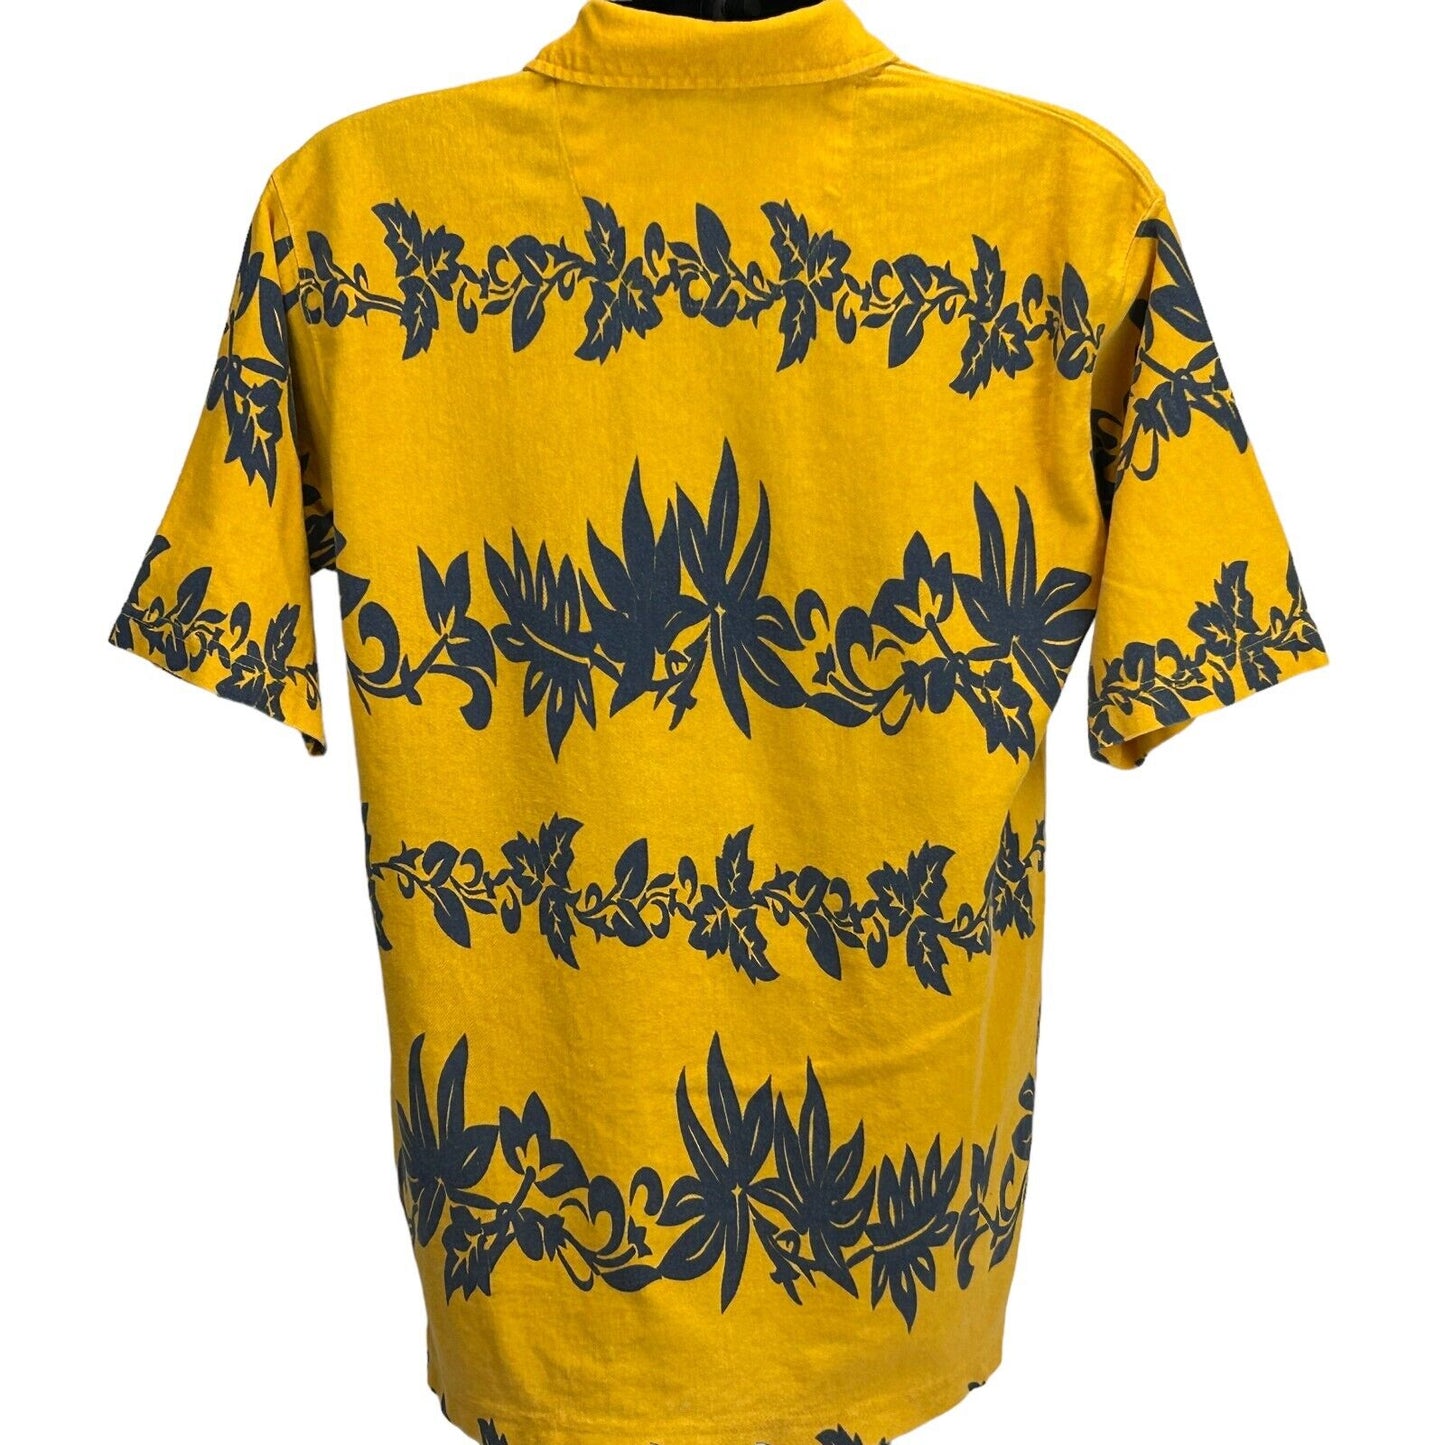 Faded Glory Hawaiian Polo T Shirt Floral Striped Yellow Blue Tee Large